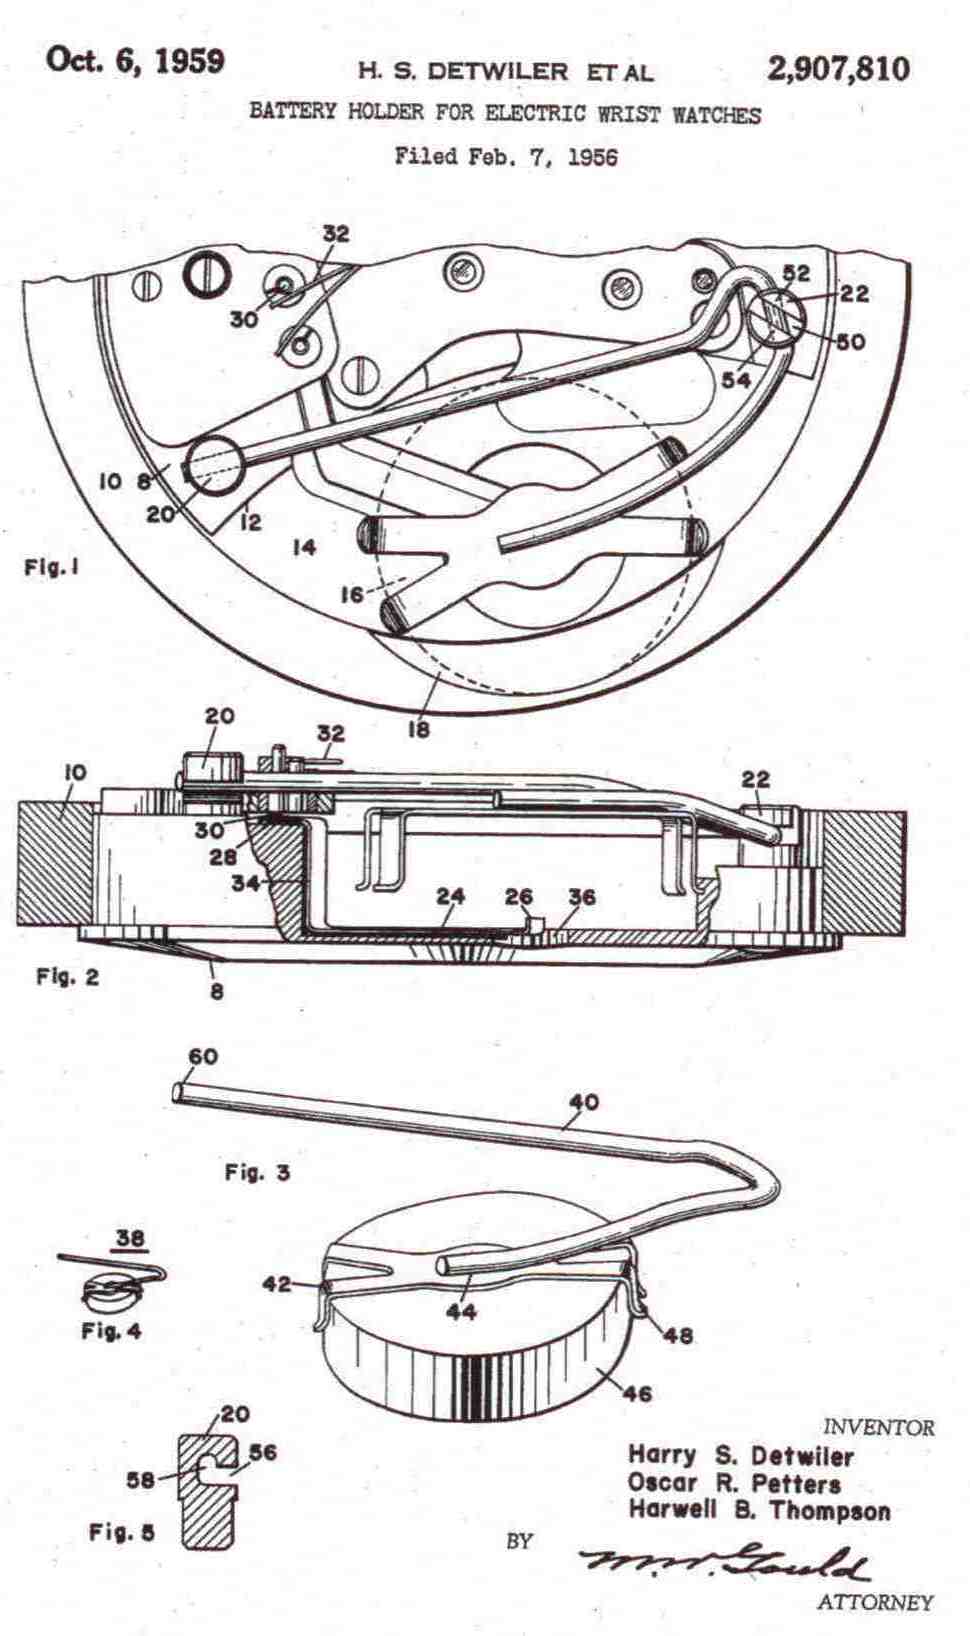 1959 Watch Patent